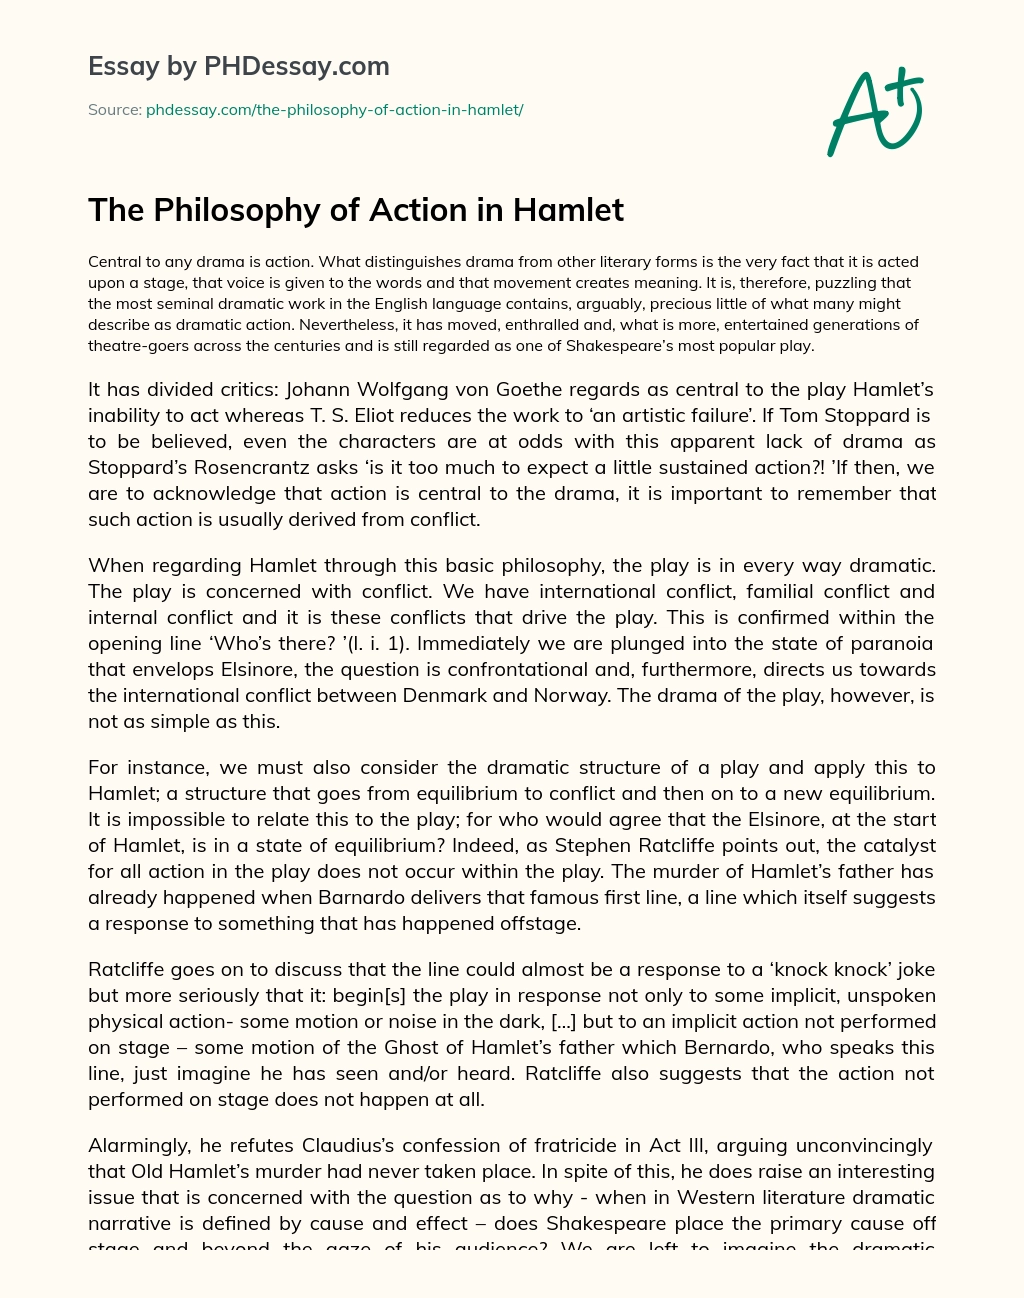 The Philosophy of Action in Hamlet essay